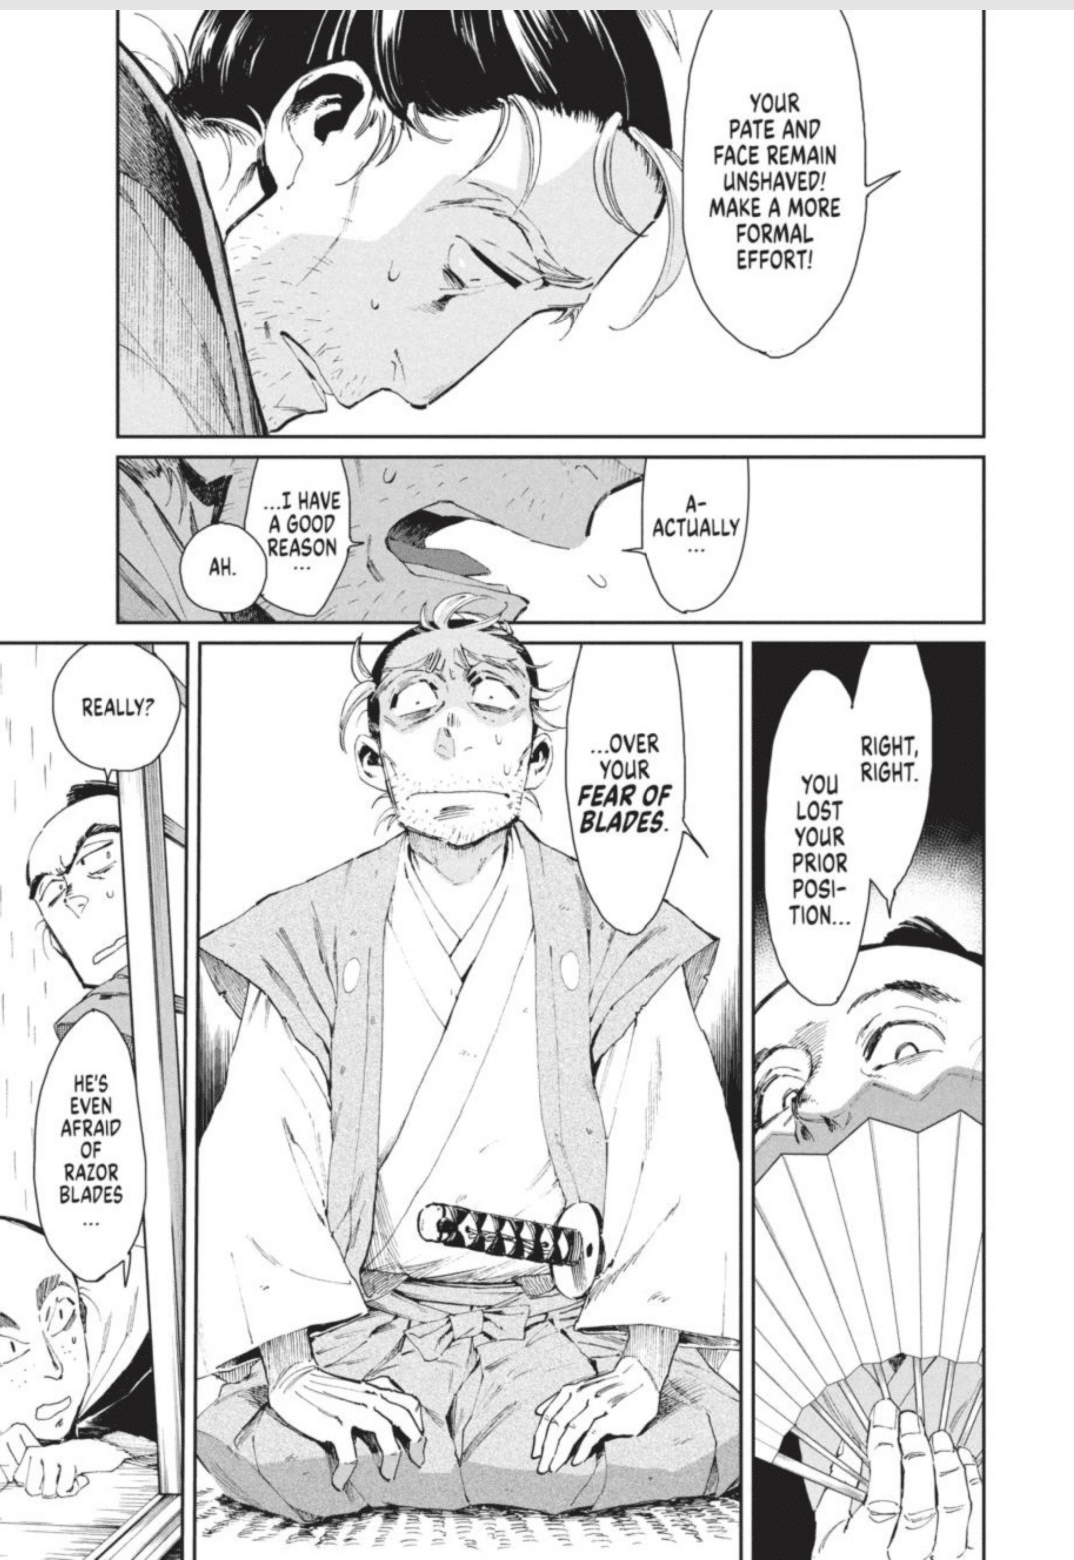 Ryudo Konosuke is asked how he can be a samurai if he cannot hold a blade.